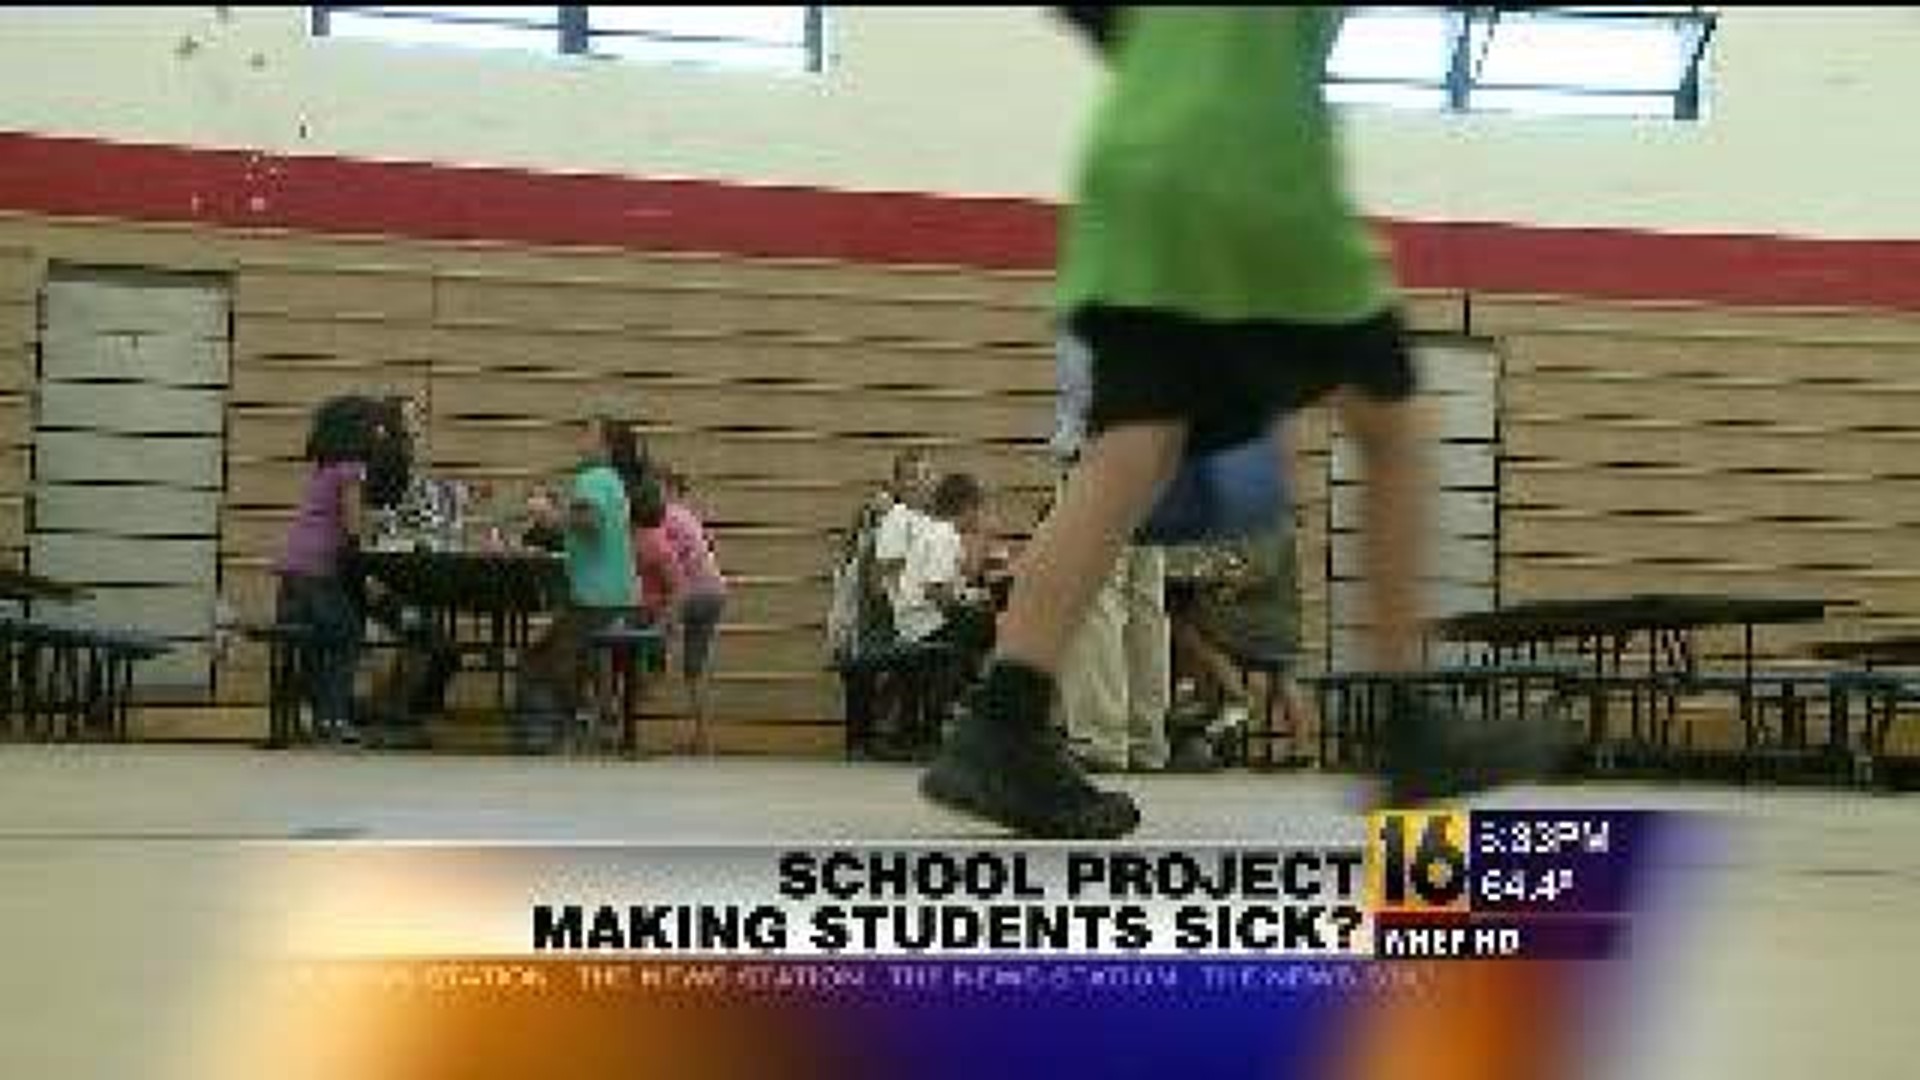 School Project Making Students Sick